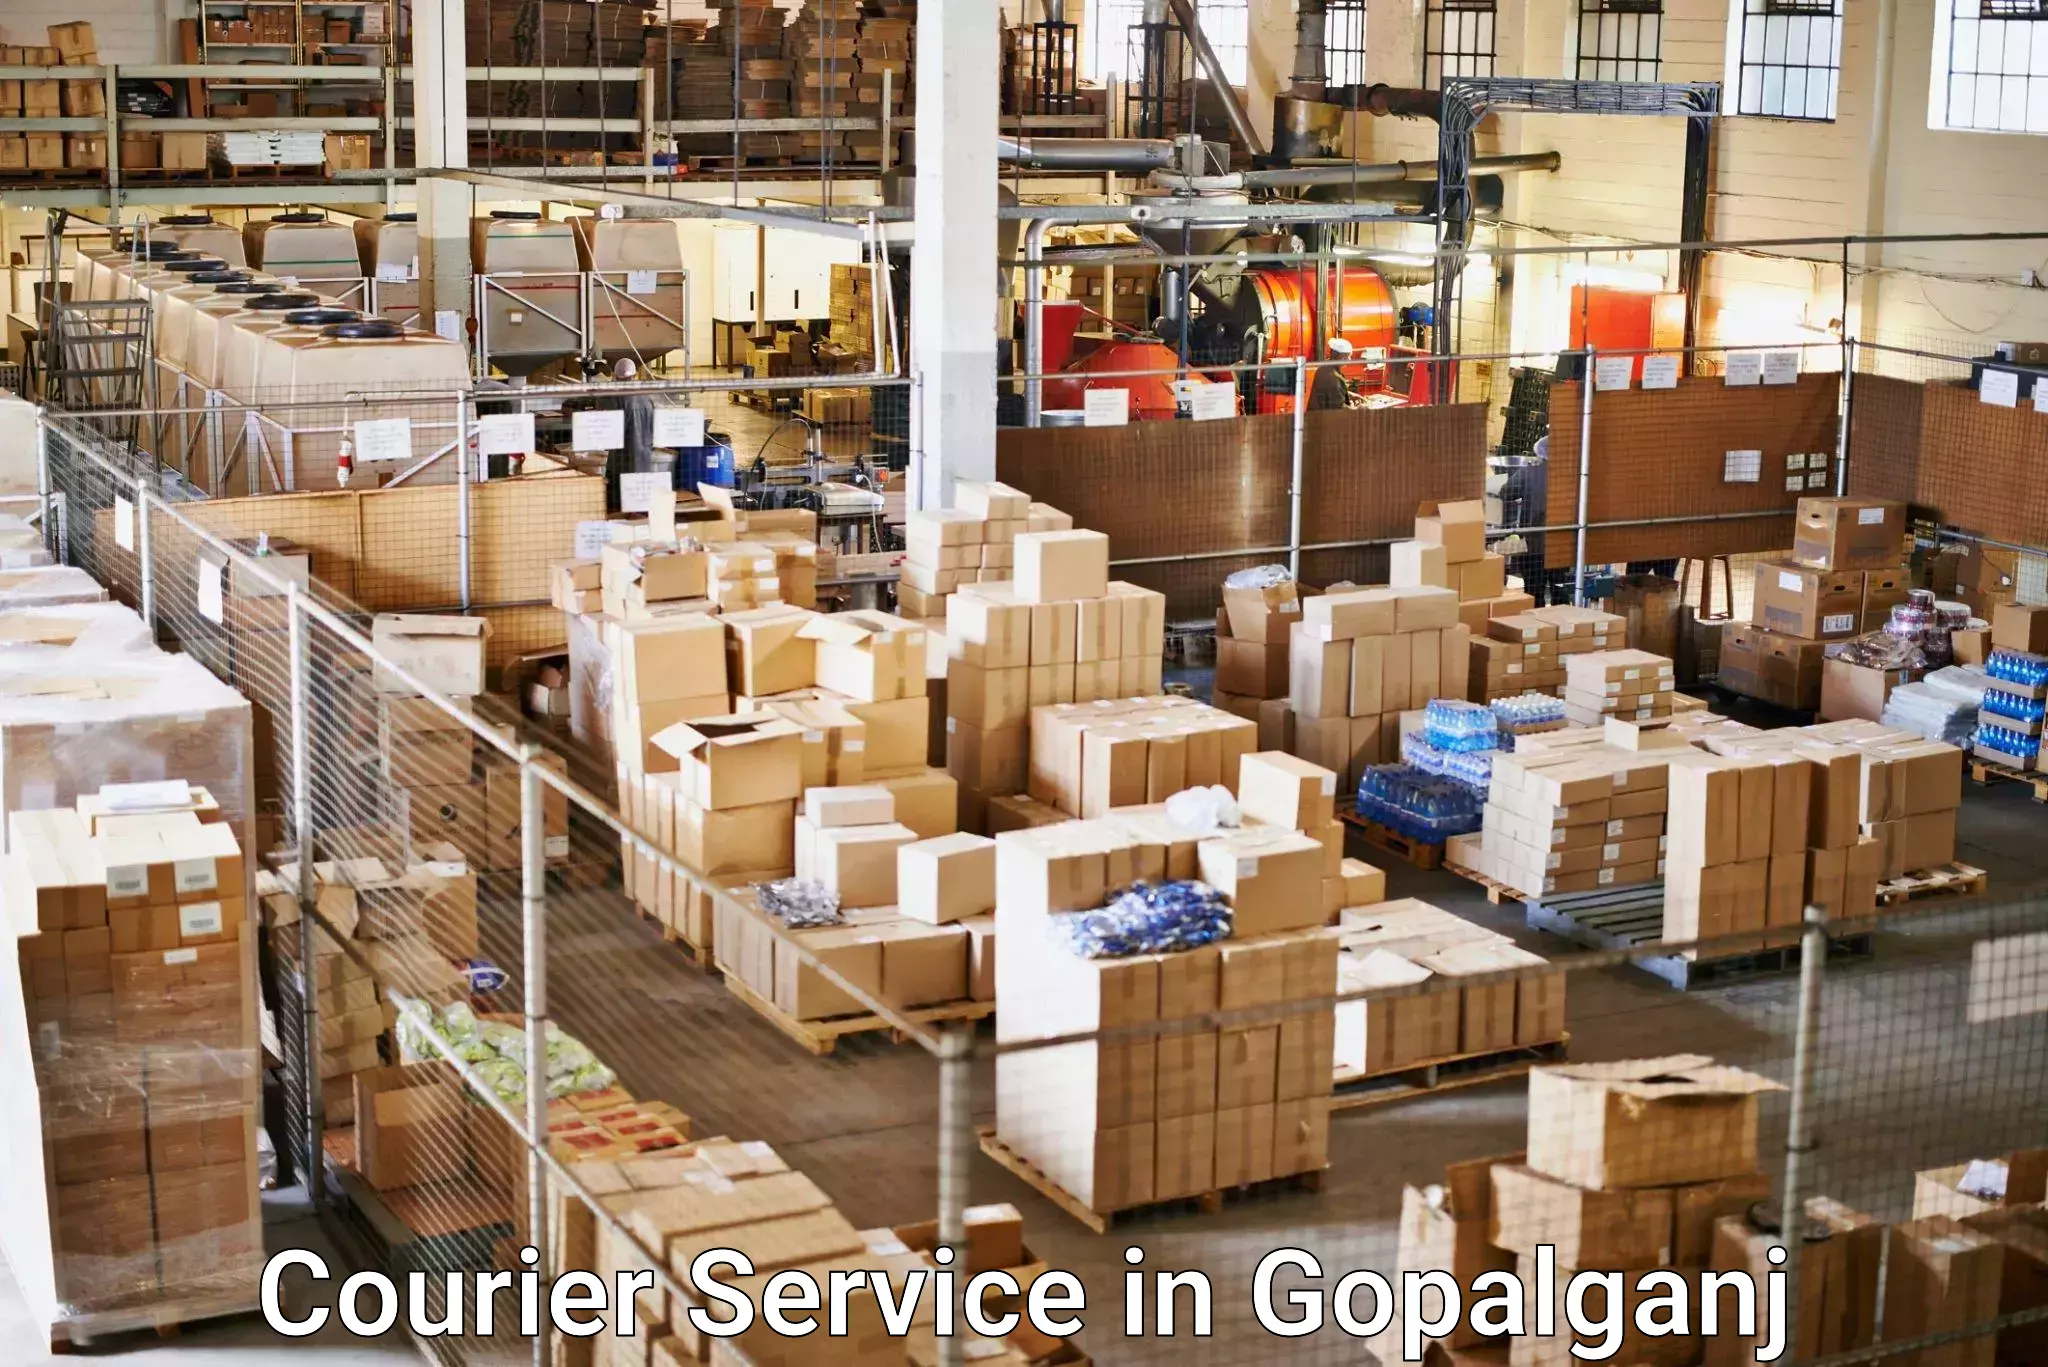 Efficient freight transportation in Gopalganj